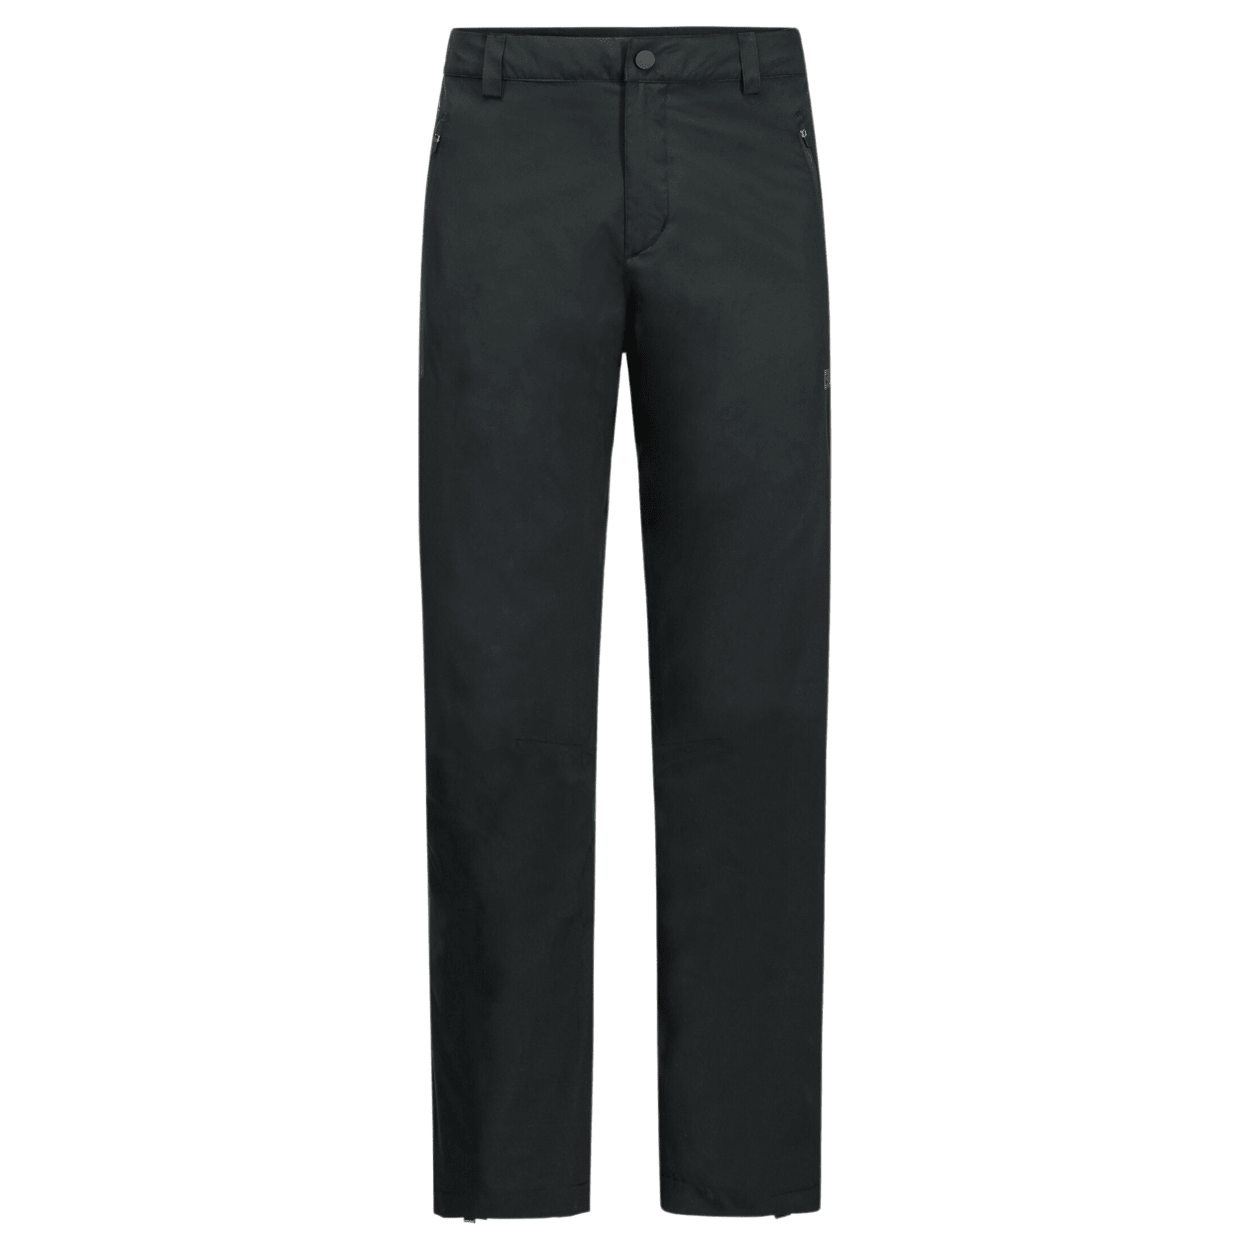 Men's hiking trousers – Buy hiking trousers – JACK WOLFSKIN